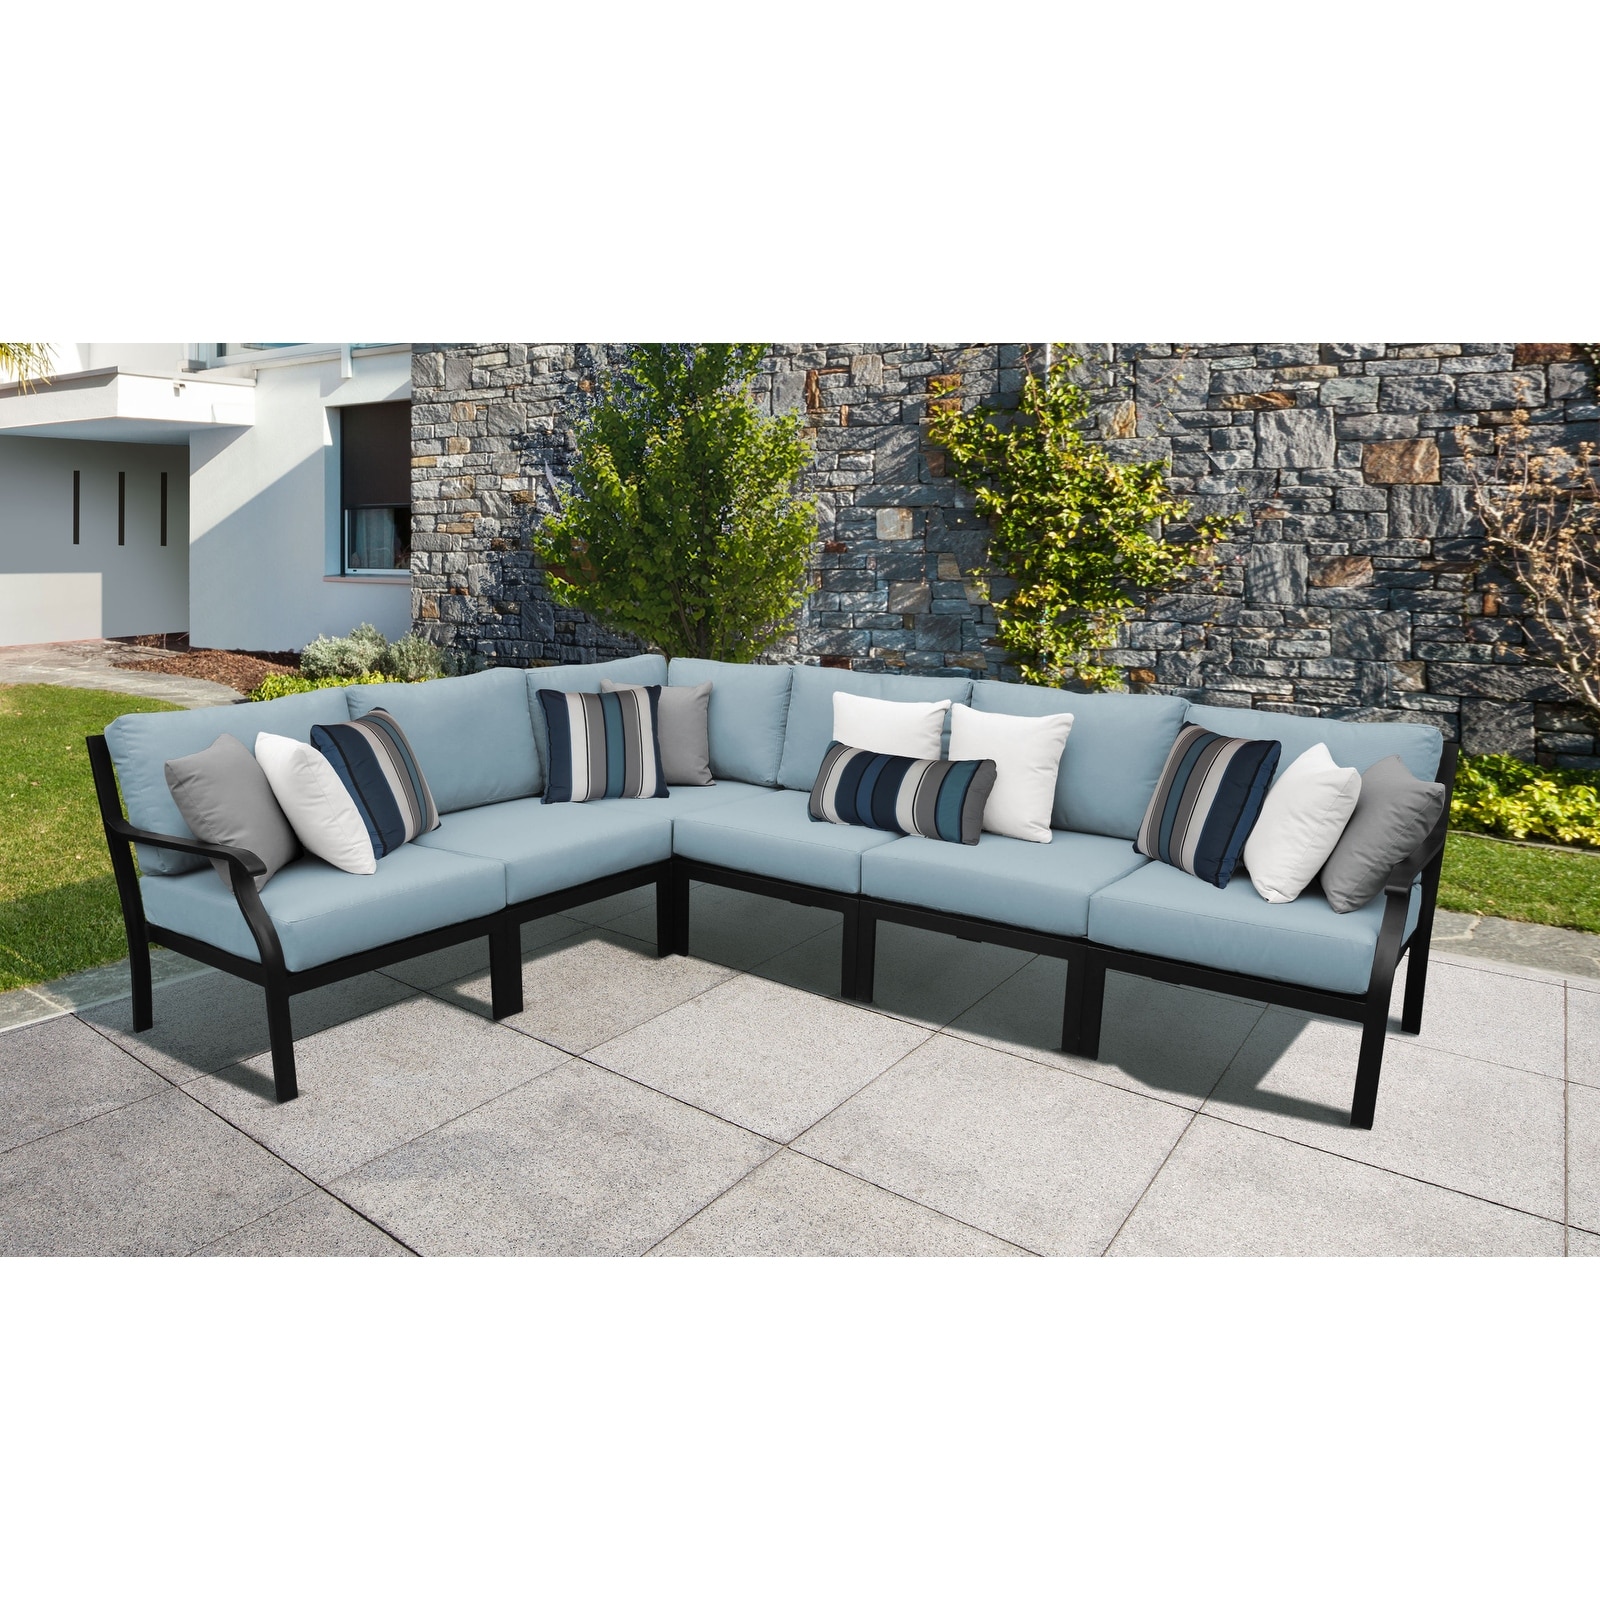 Kathy Ireland Madison Ave. 6-piece Outdoor Patio Furniture Set